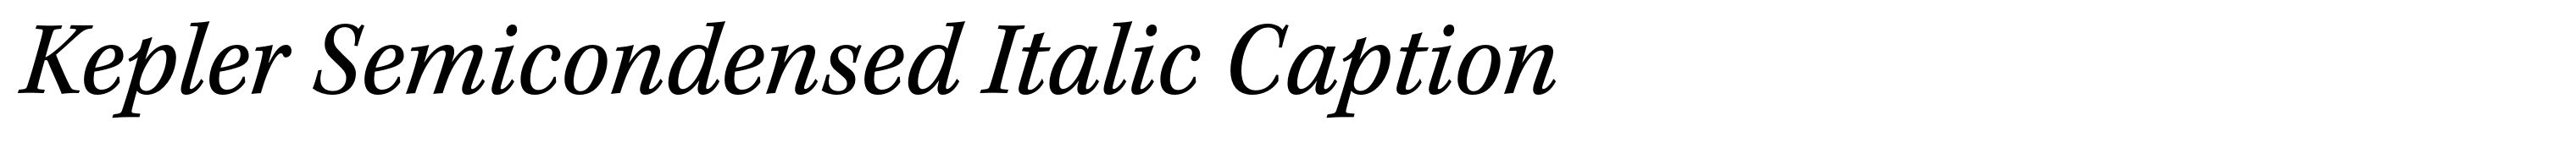 Kepler Semicondensed Italic Caption